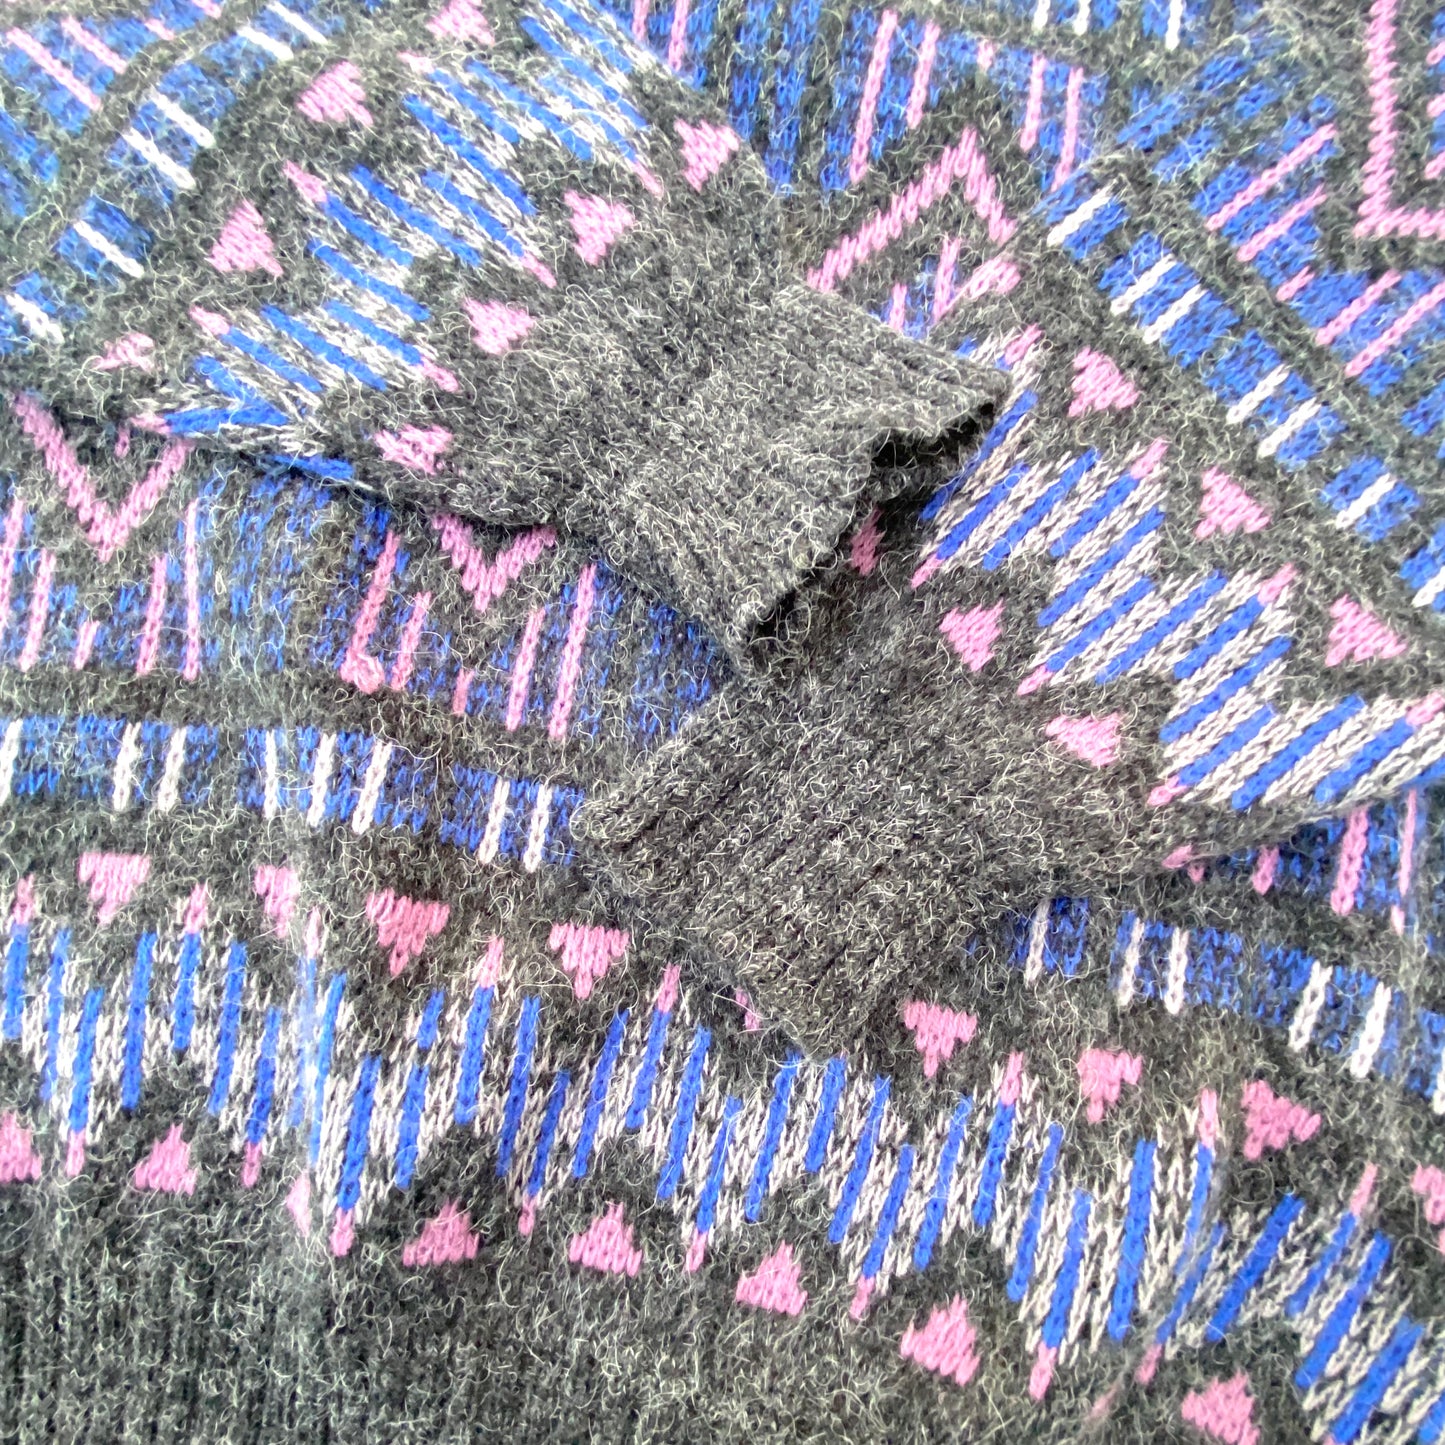 Vintage Original Cube Knitwear Sweater